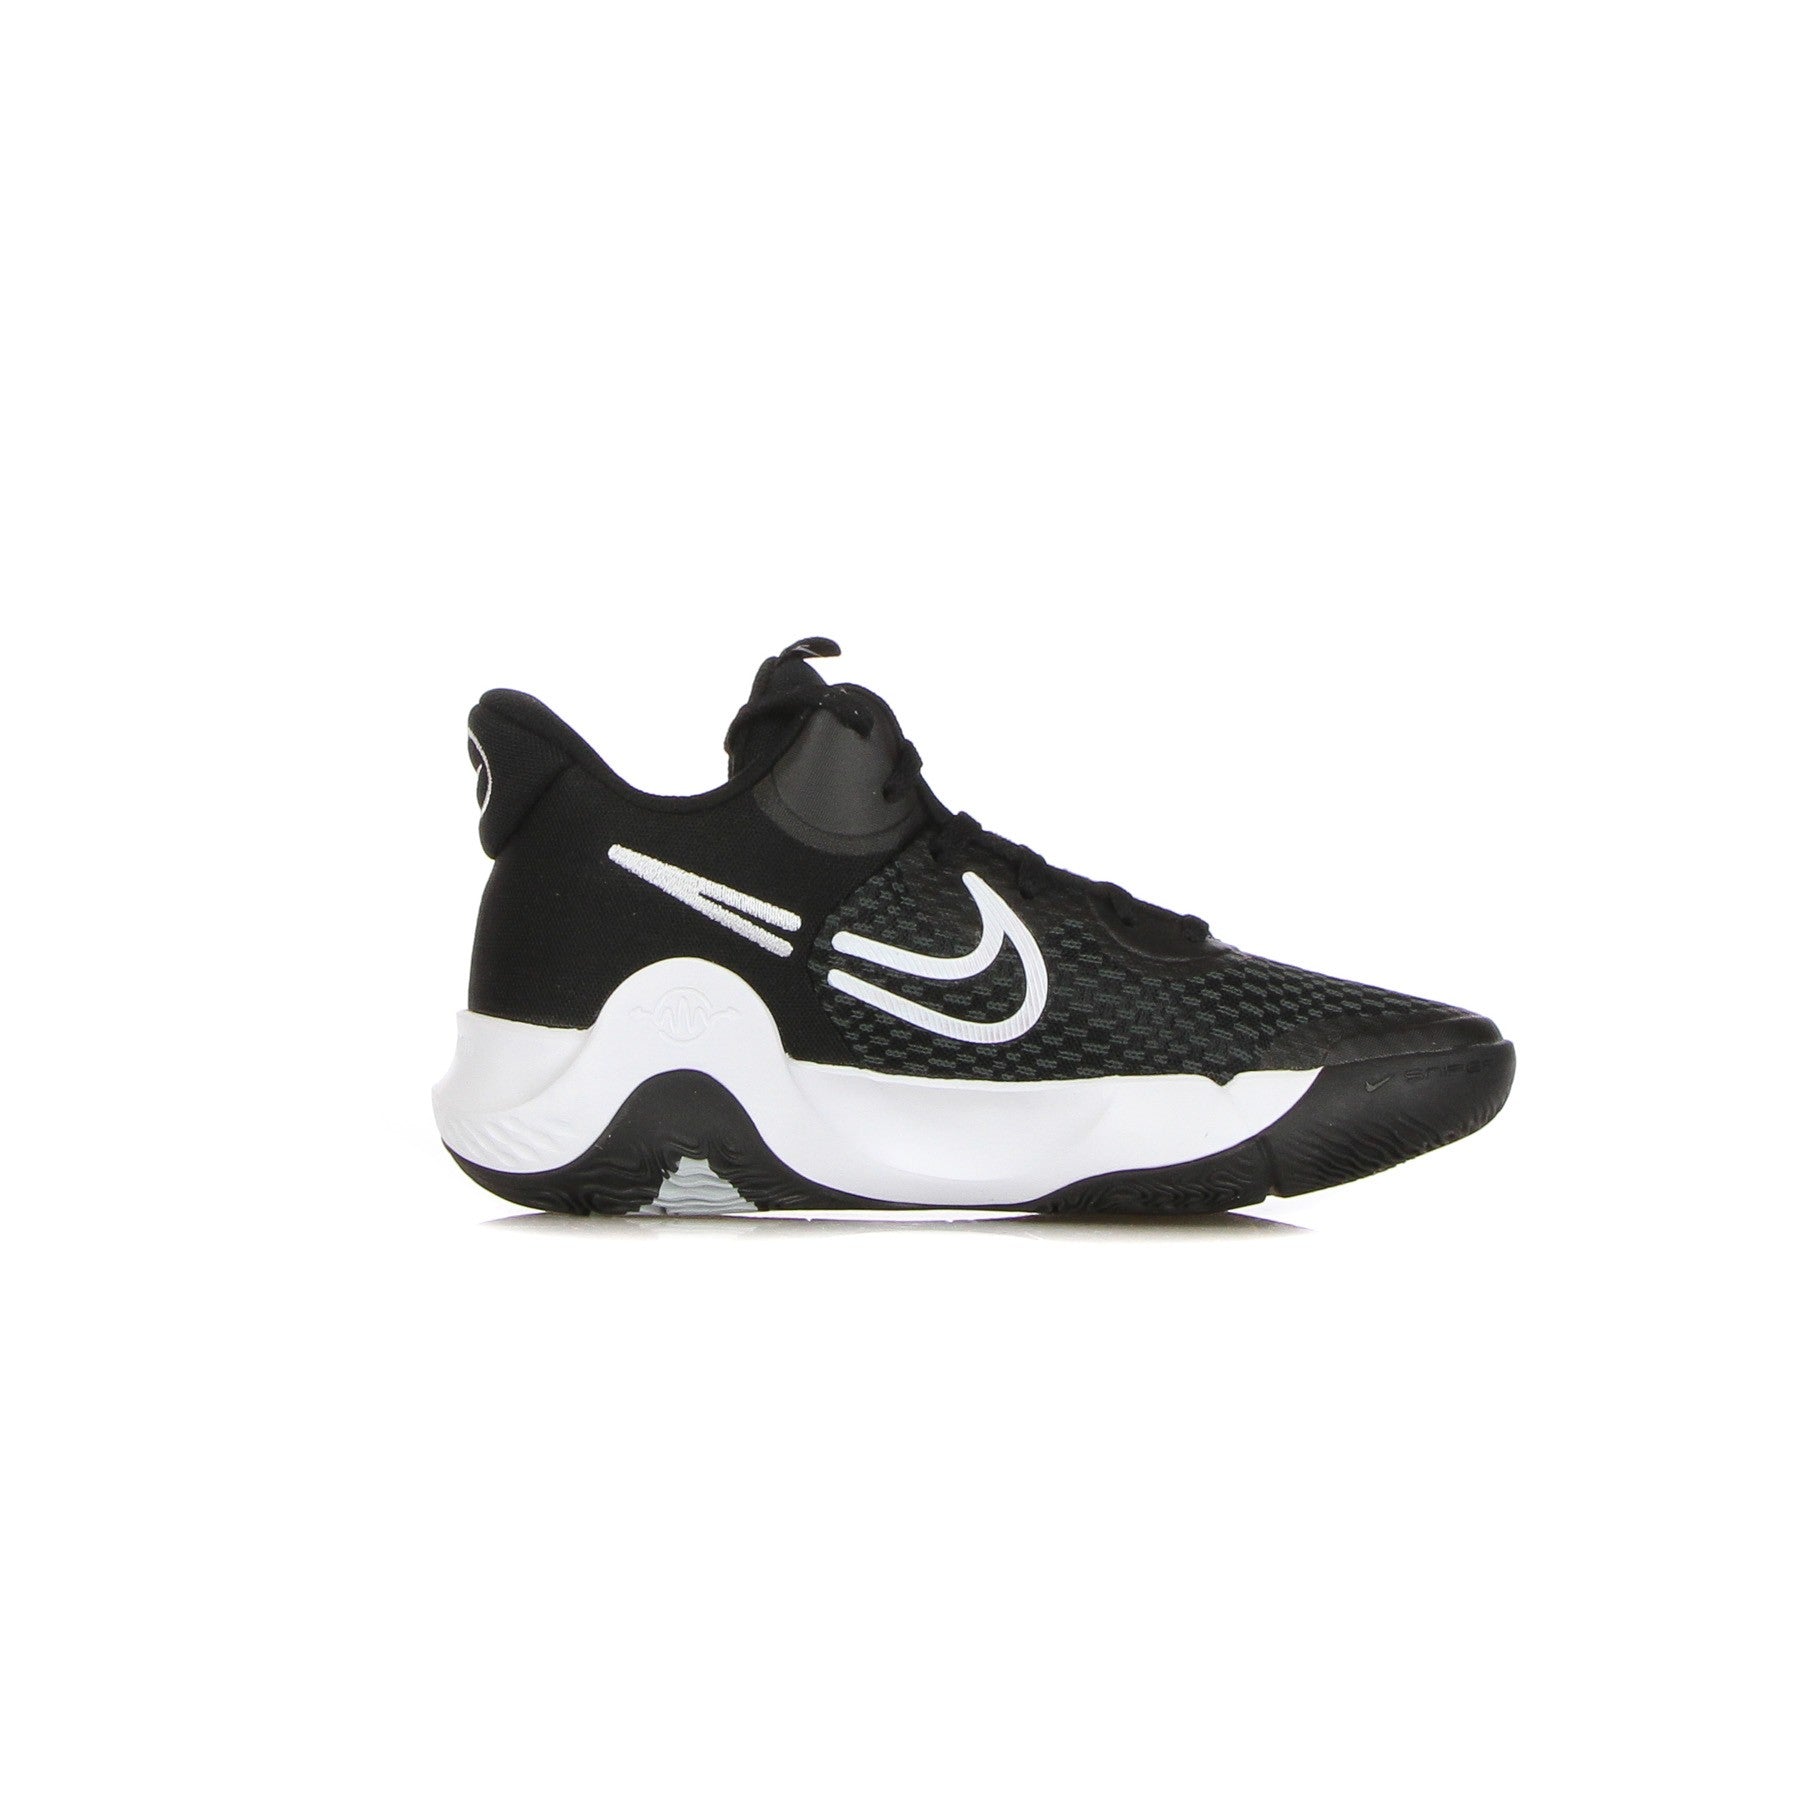 Kd Trey 5 Ix Men's Basketball Shoe Black/white/anthracite/wolf Grey